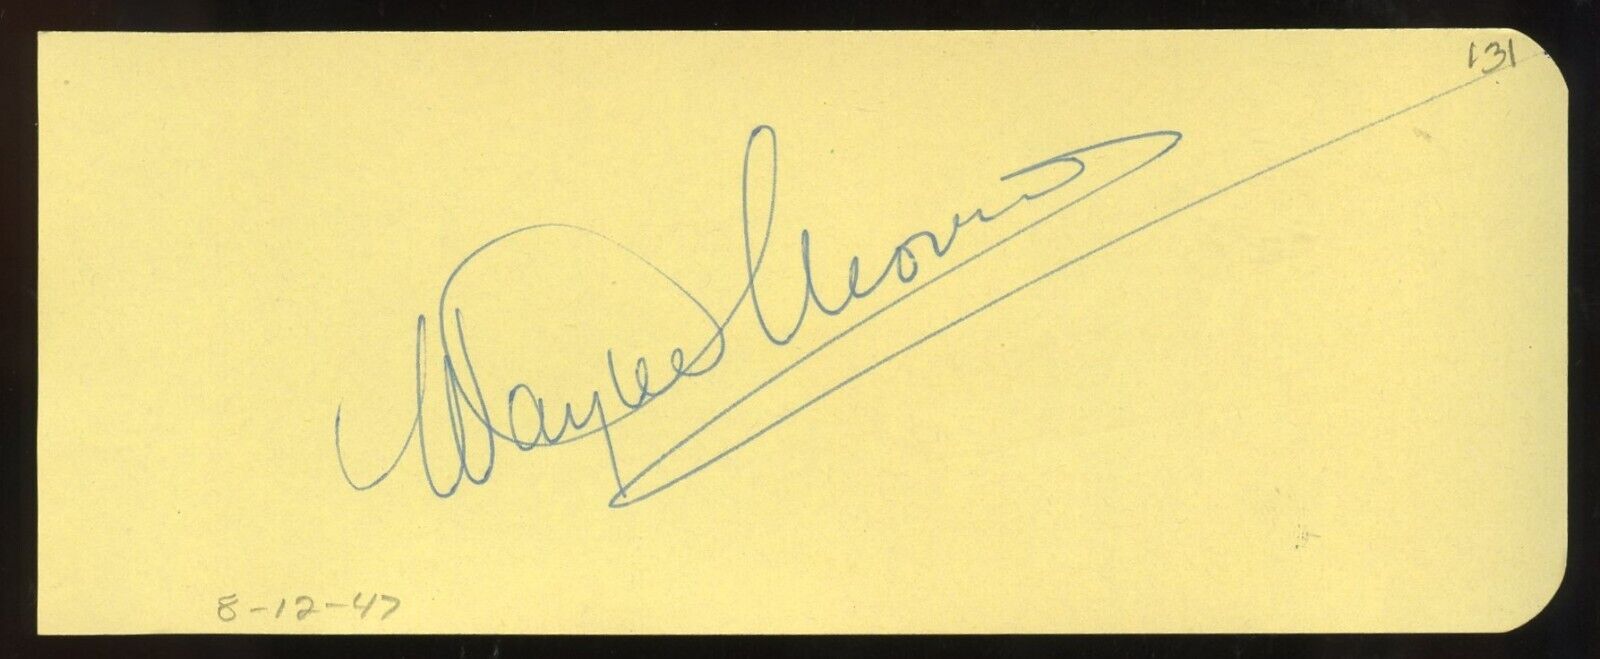 Wayne Morris d1959 signed 2x5 cut autograph on 8-12-47 Actor in Kid Galahad